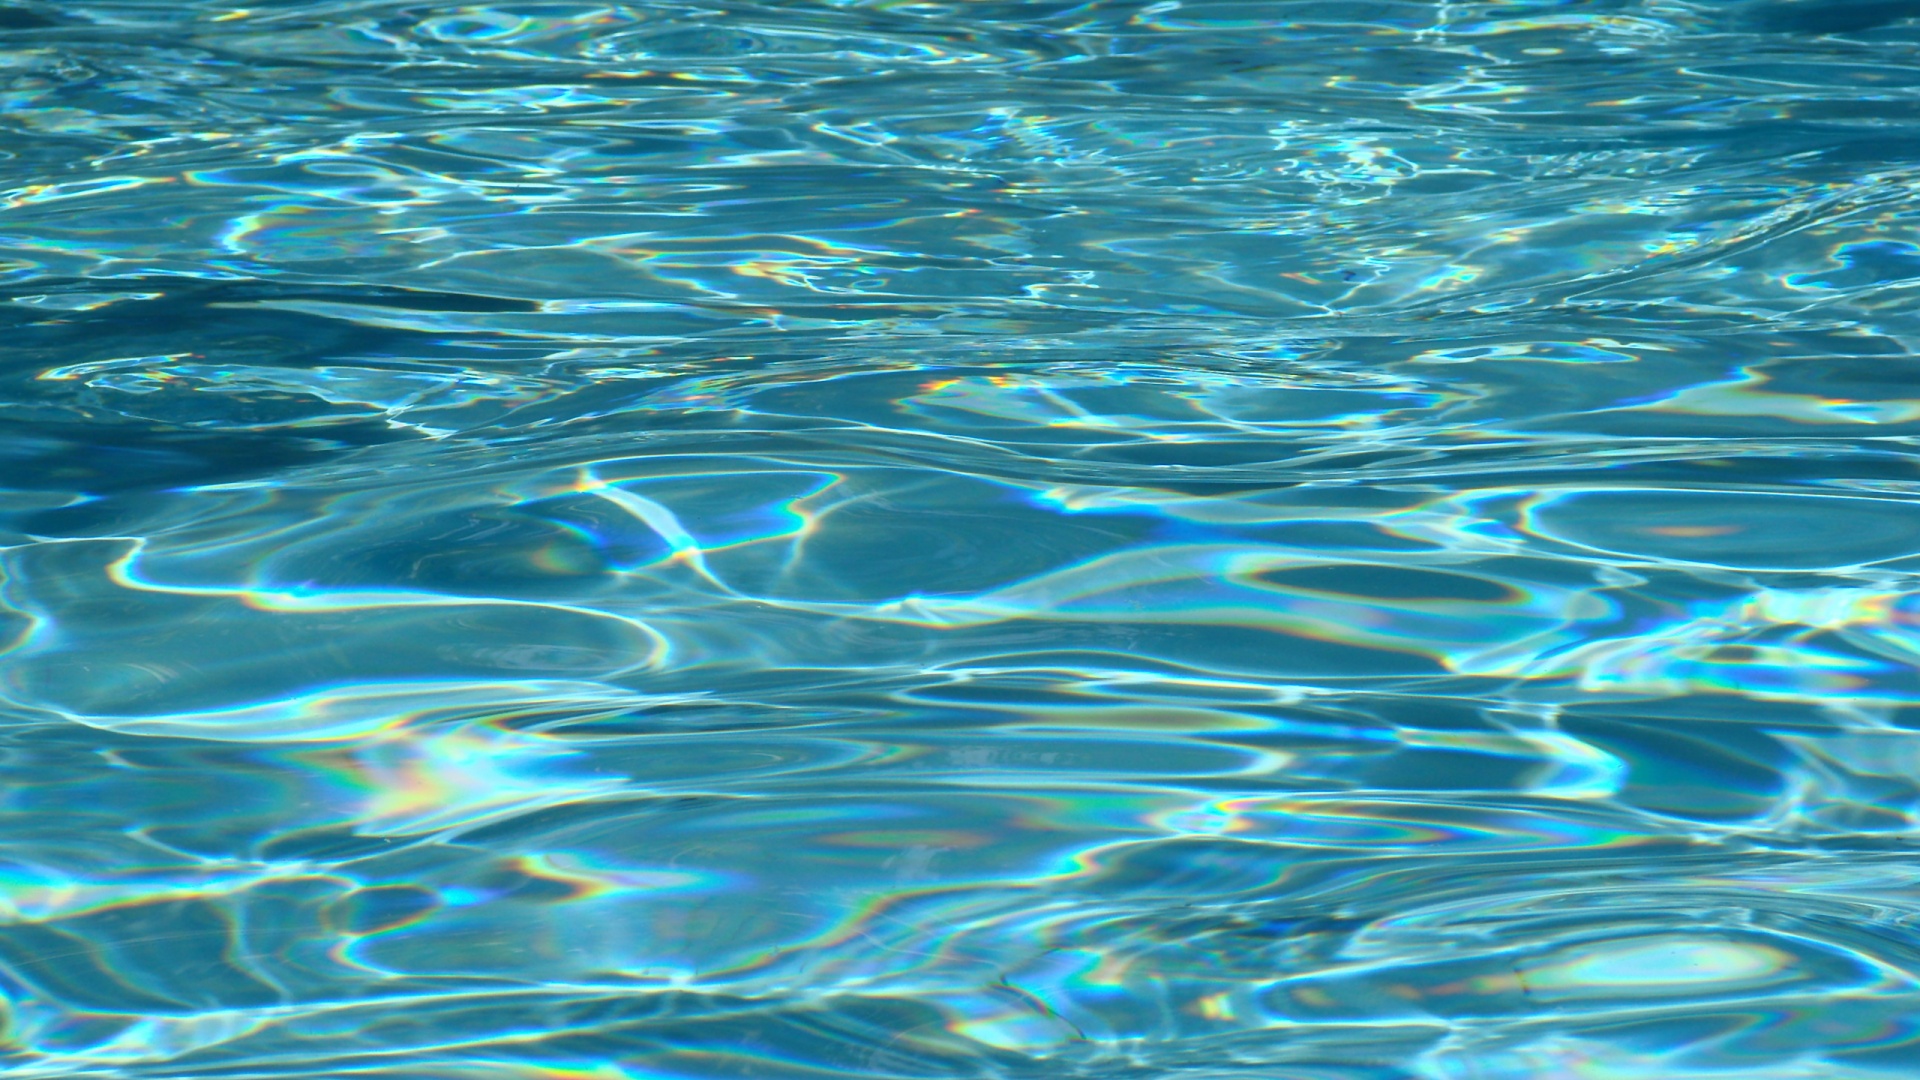 Water Neon Wallpaper Image High Resolution